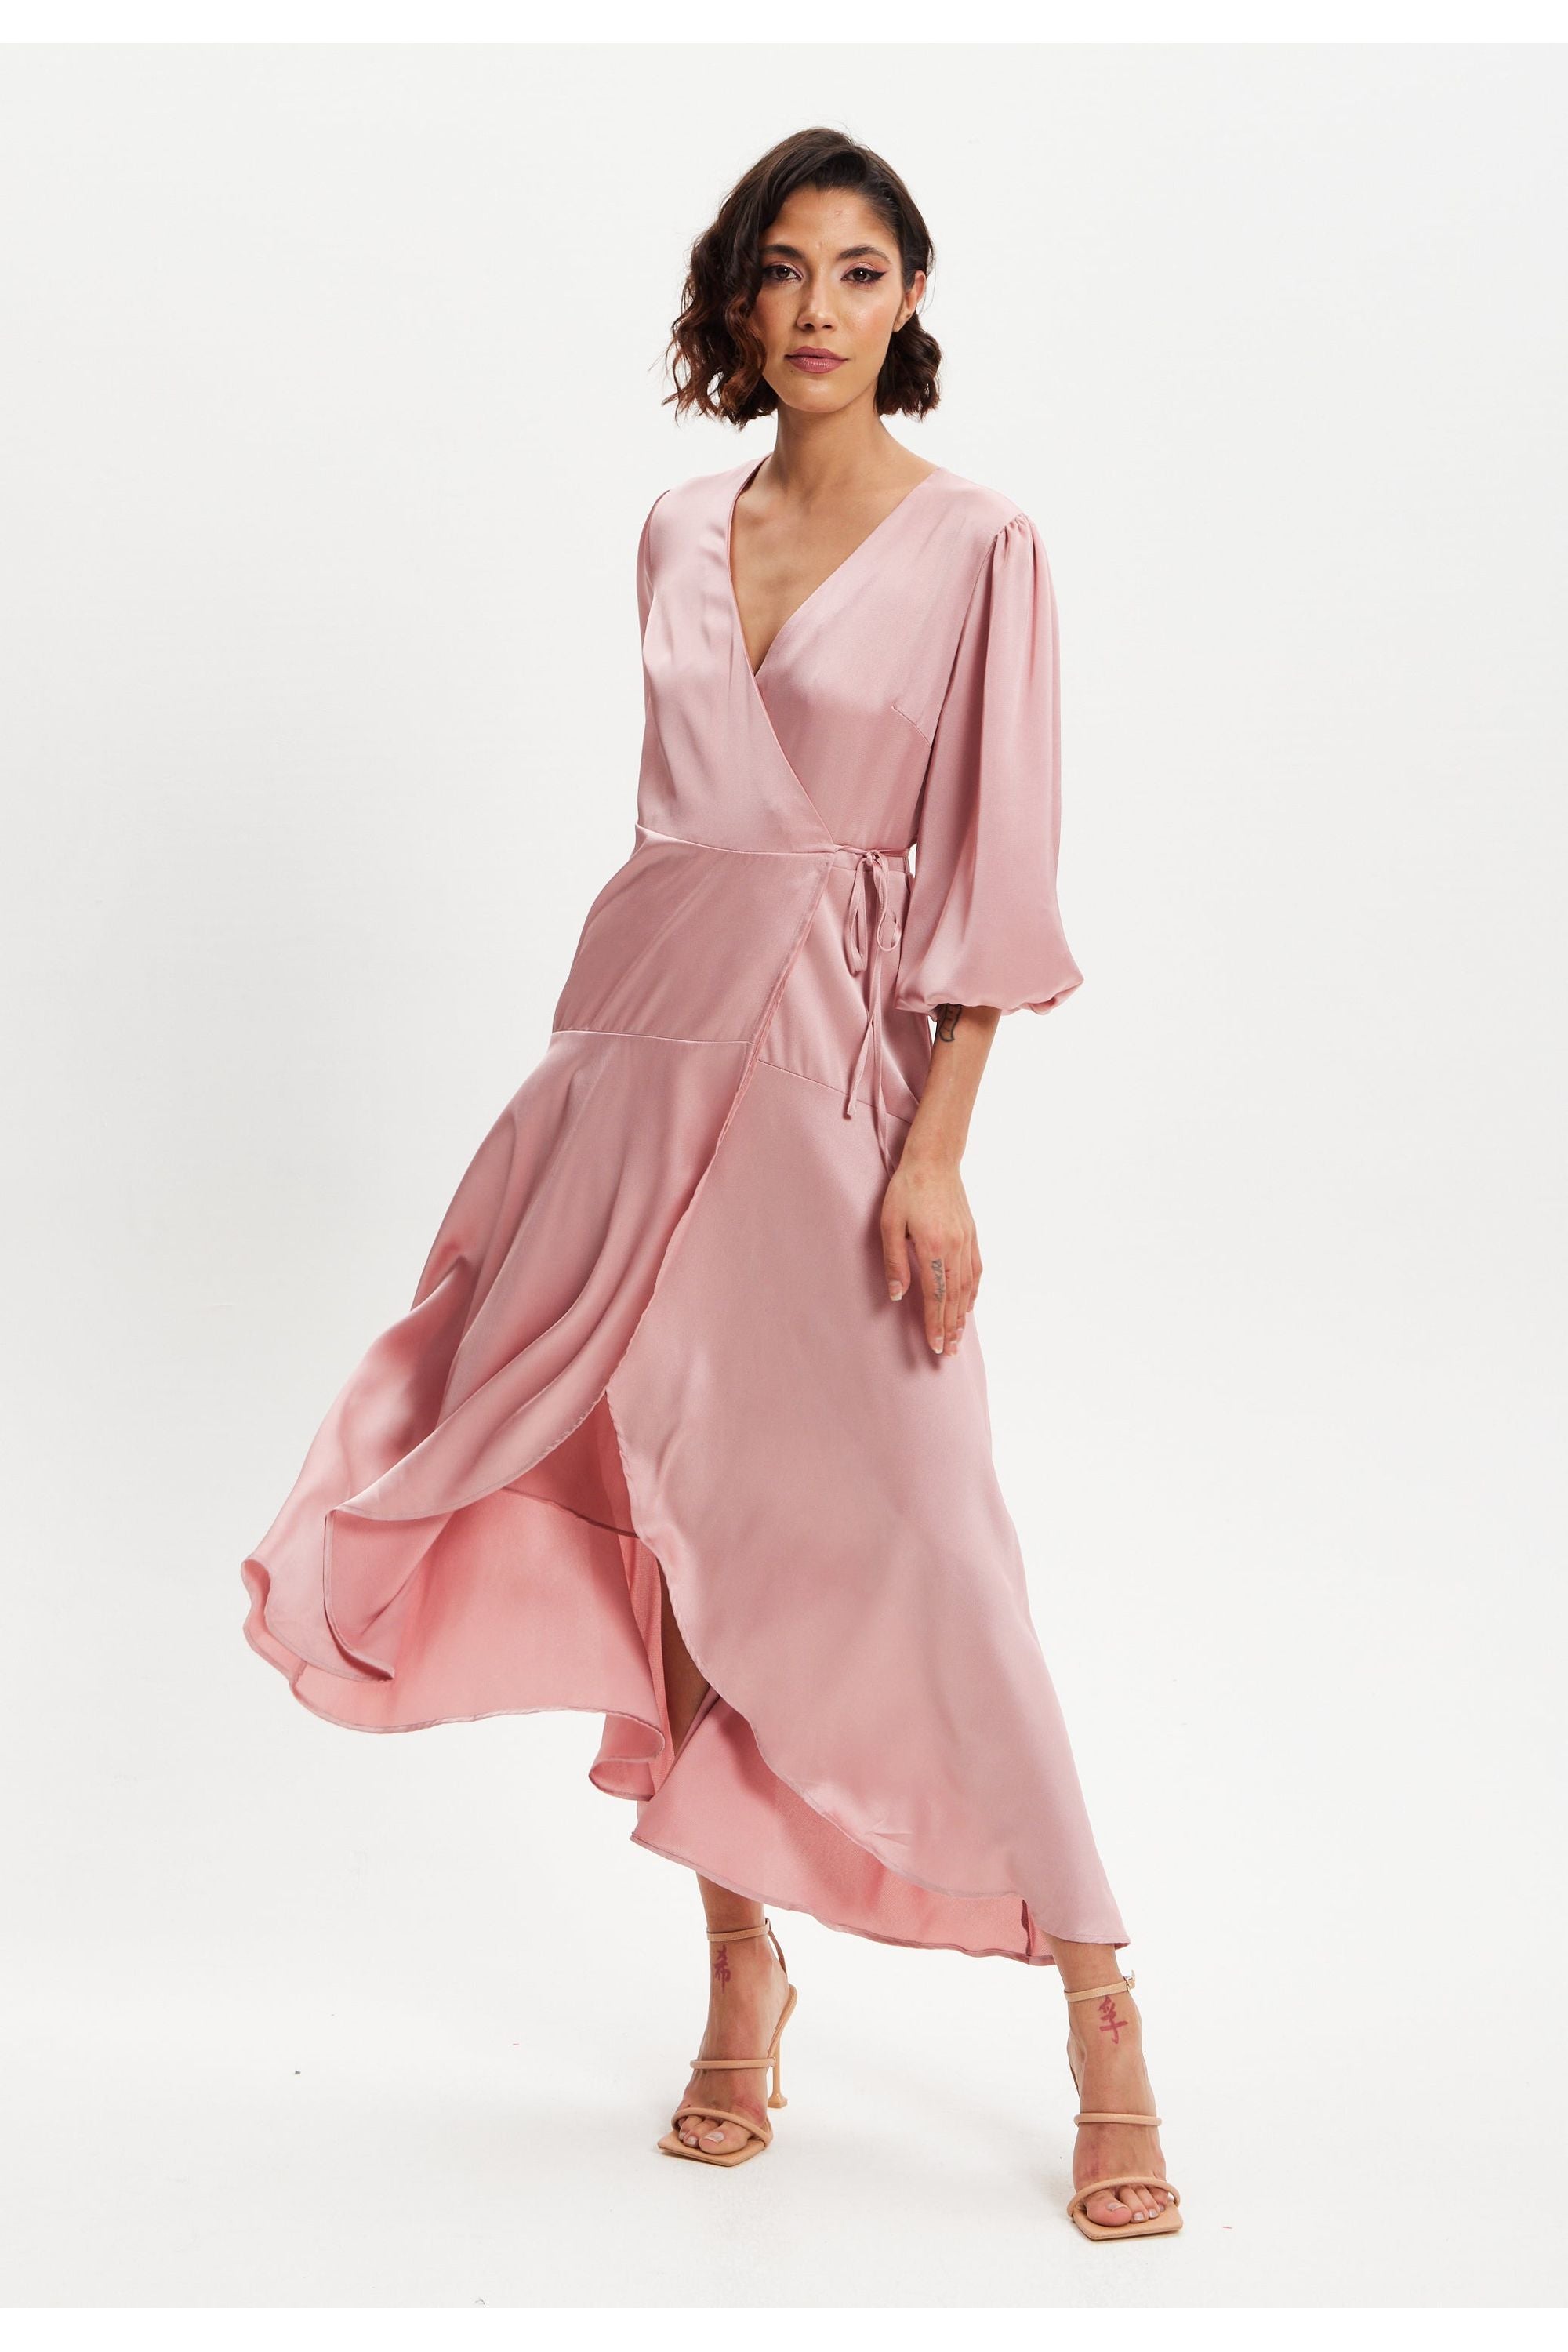 Pink Midi Wrap Dress With Short Puff Sleeves LIQ20-128Pink